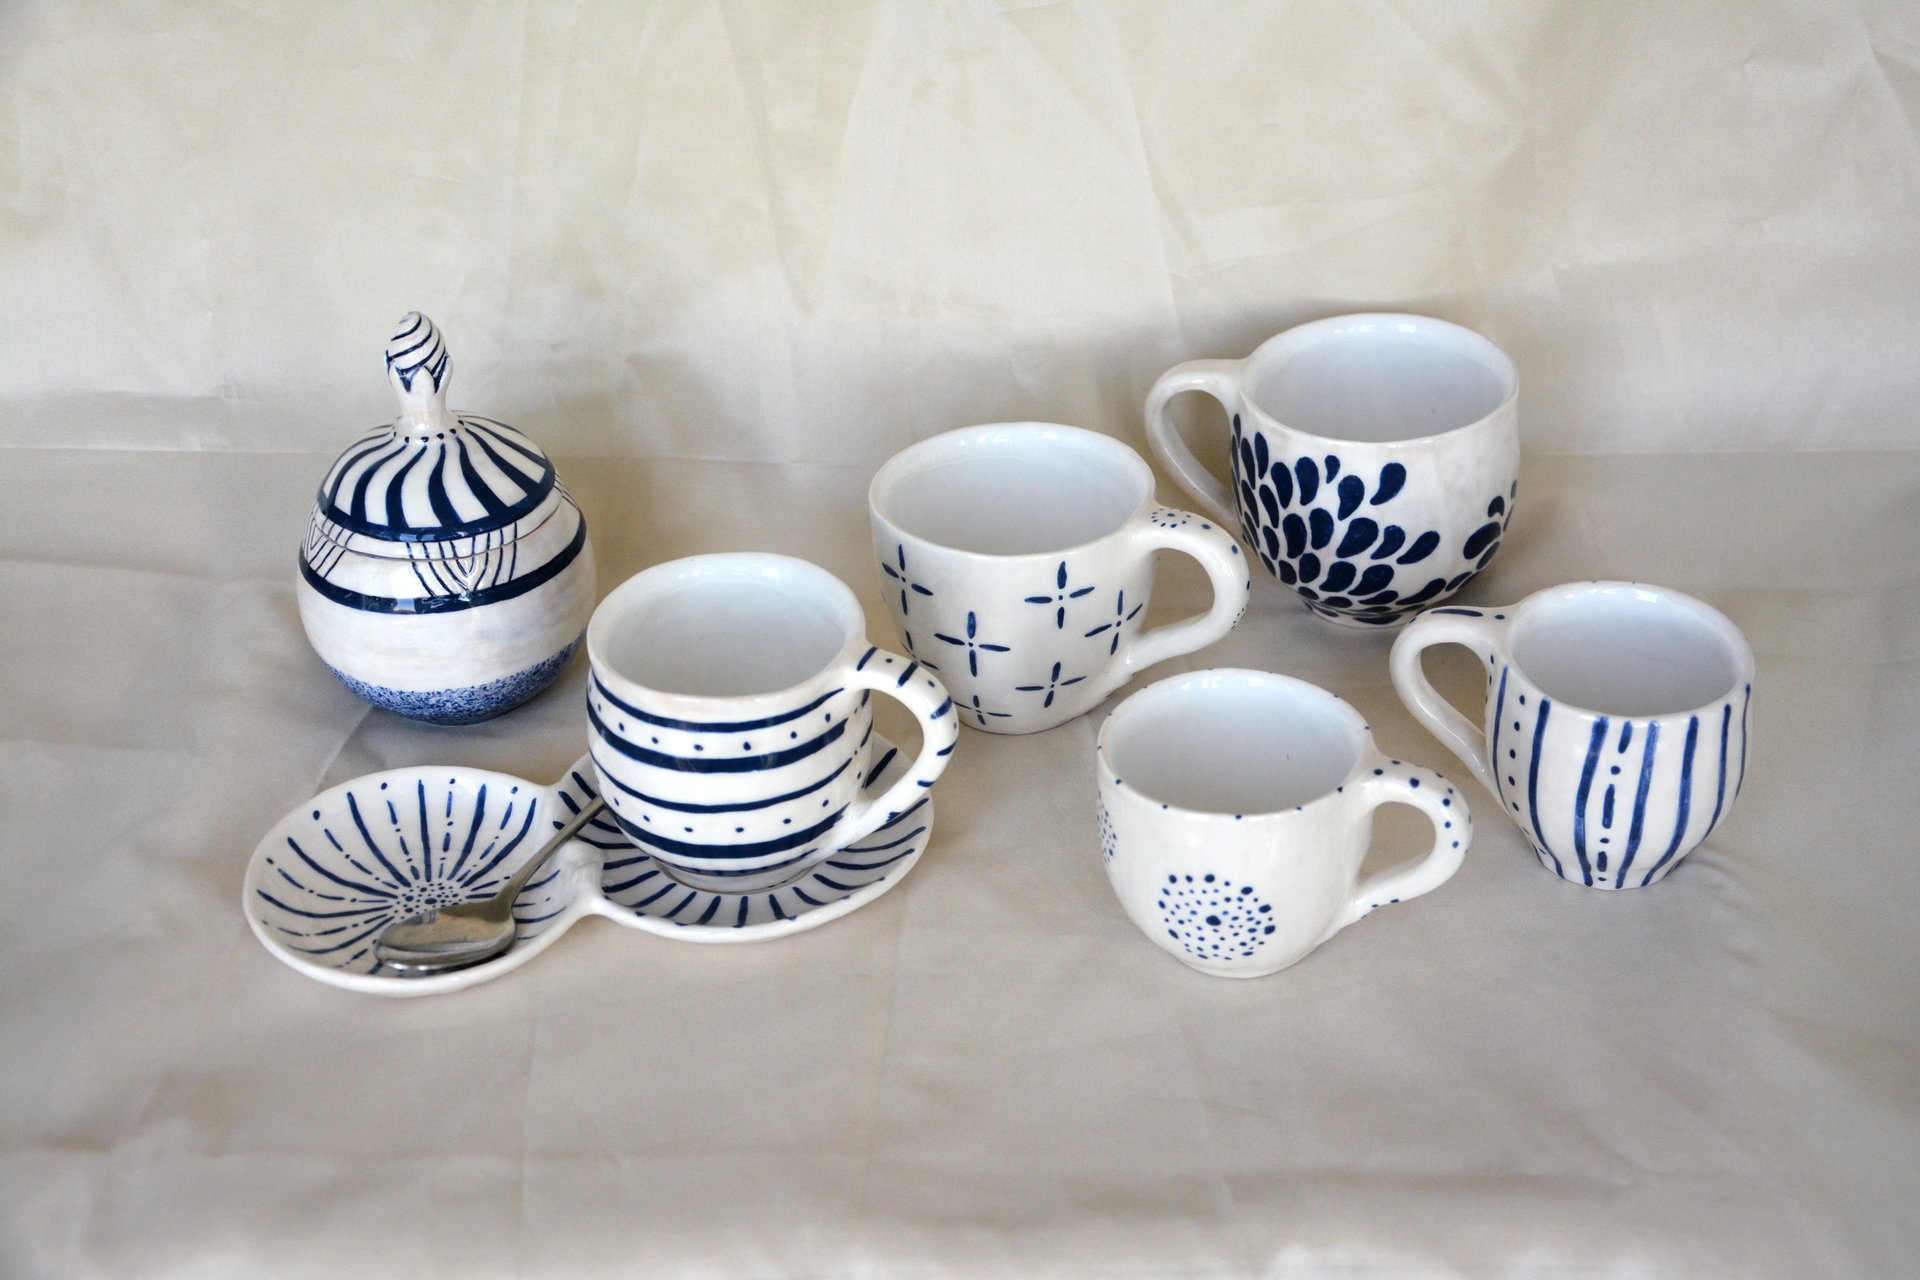 A set of cups plus sugar bowl Modern gzhel - Cups, glasses, mugs, 150 ml - 300 ml, photo 2 of 2.